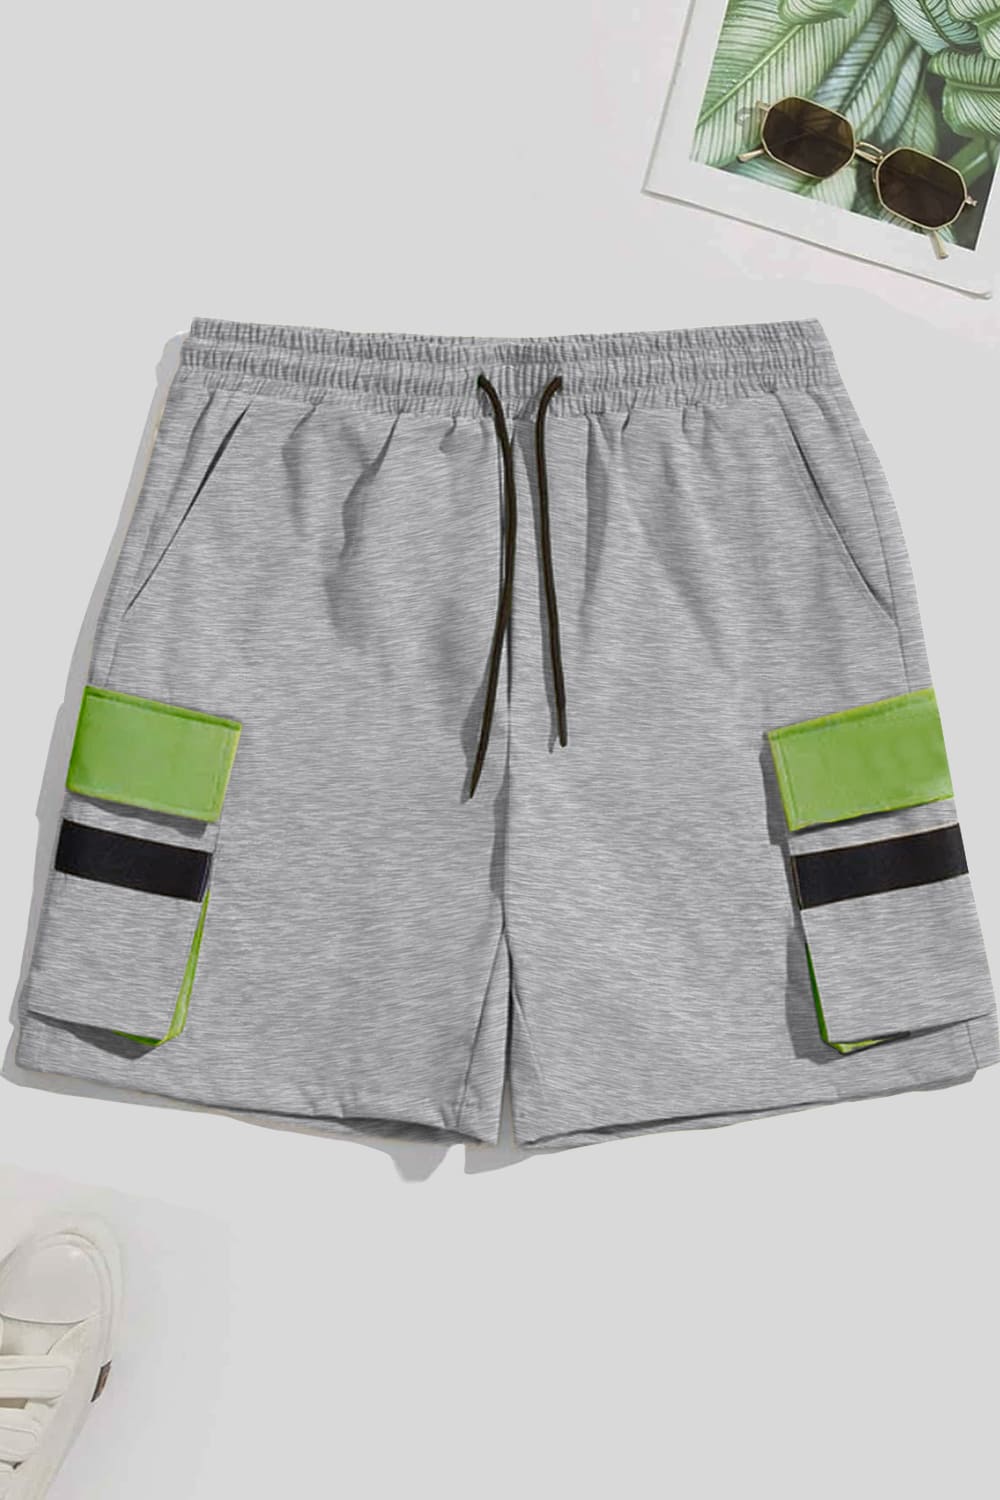 Grey Melange Marley Utility Pocket Shorts